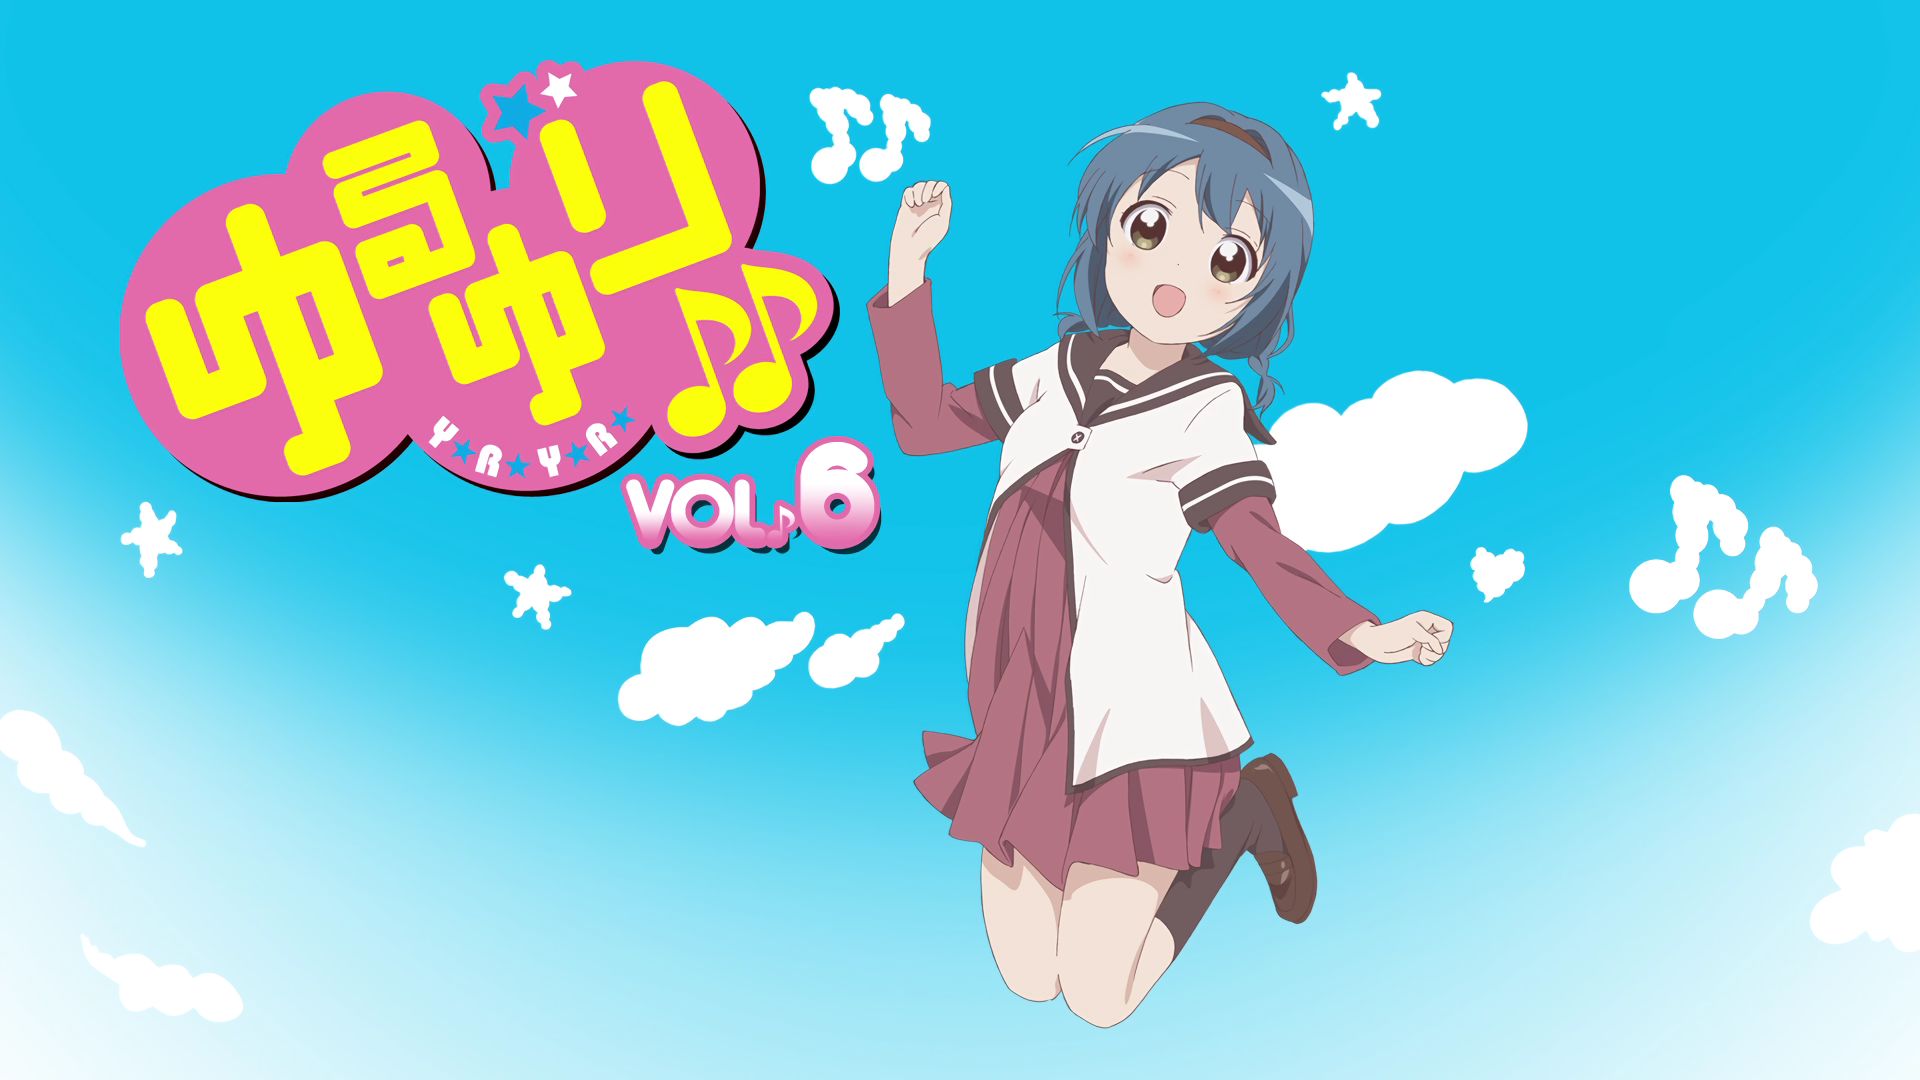 762100 Bild herunterladen animes, yuru yuri, himawari furutani - Hintergrundbilder und Bildschirmschoner kostenlos